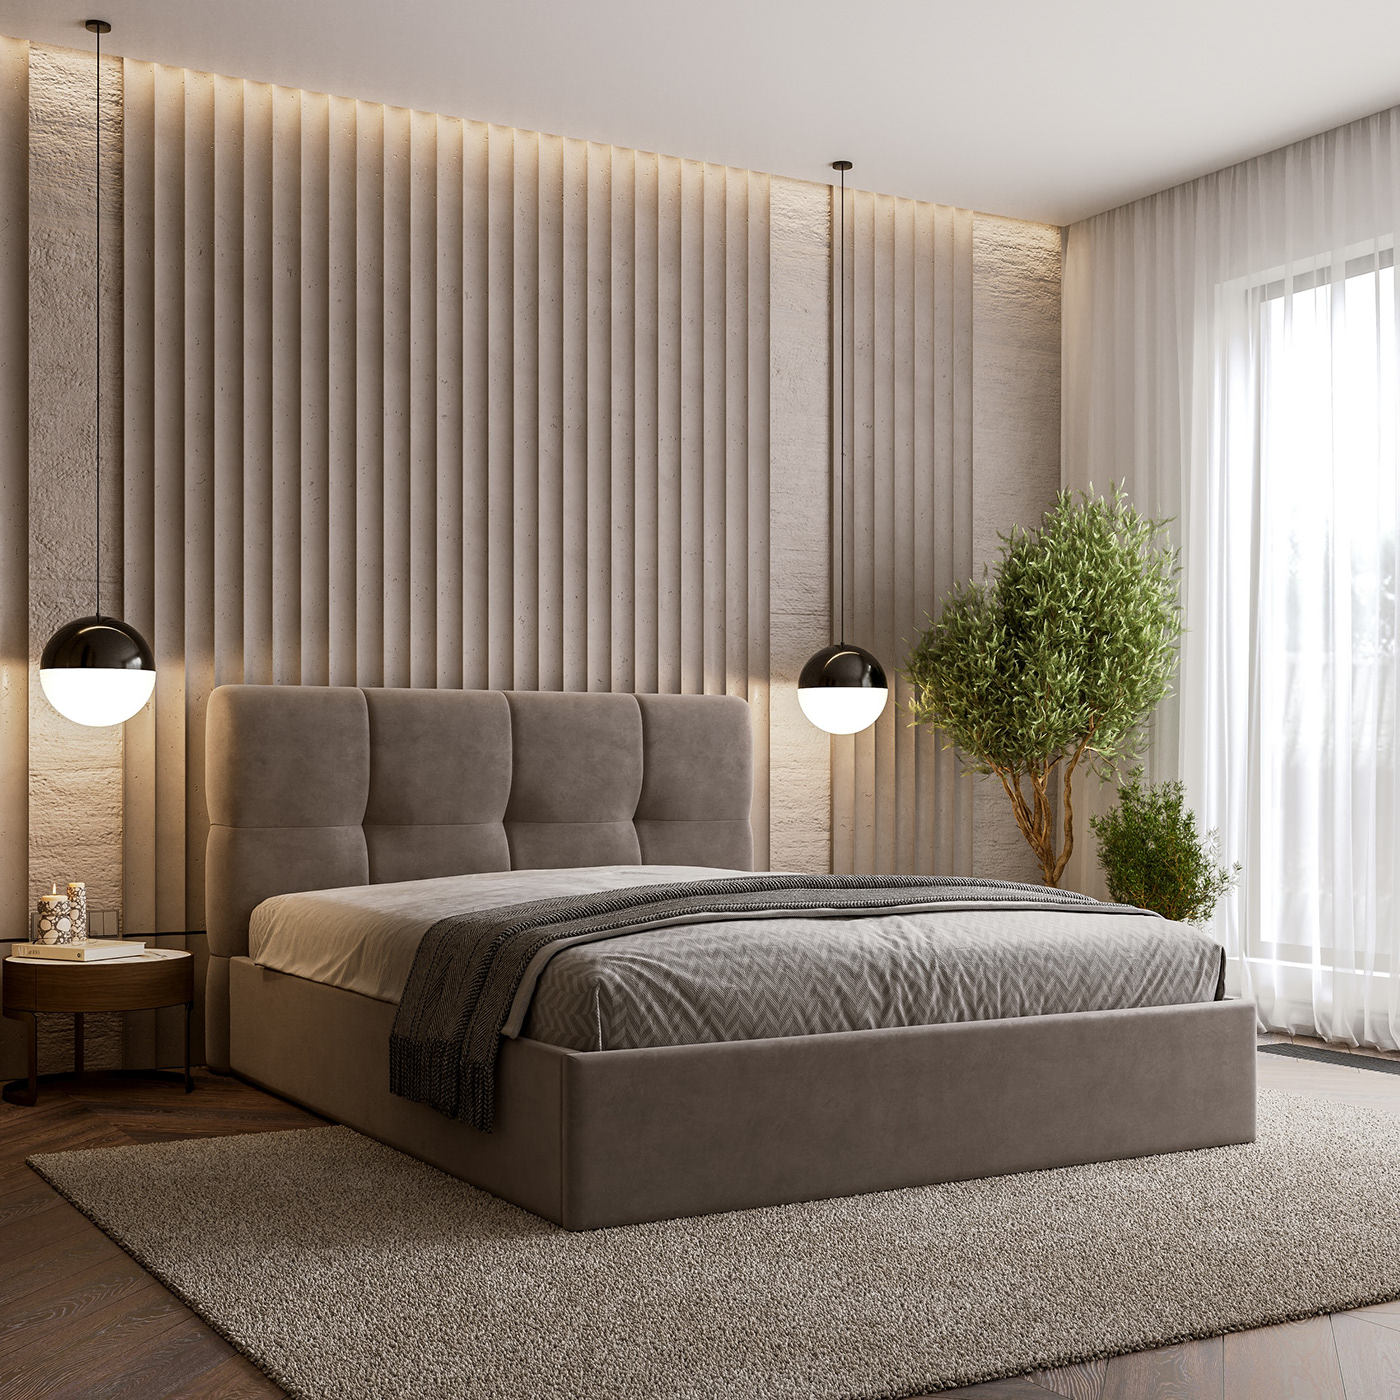 modern elegant comfortable large focal point Bedroom interior 3D Visualization interior design  Plush Grey Headboard Textured Bedding